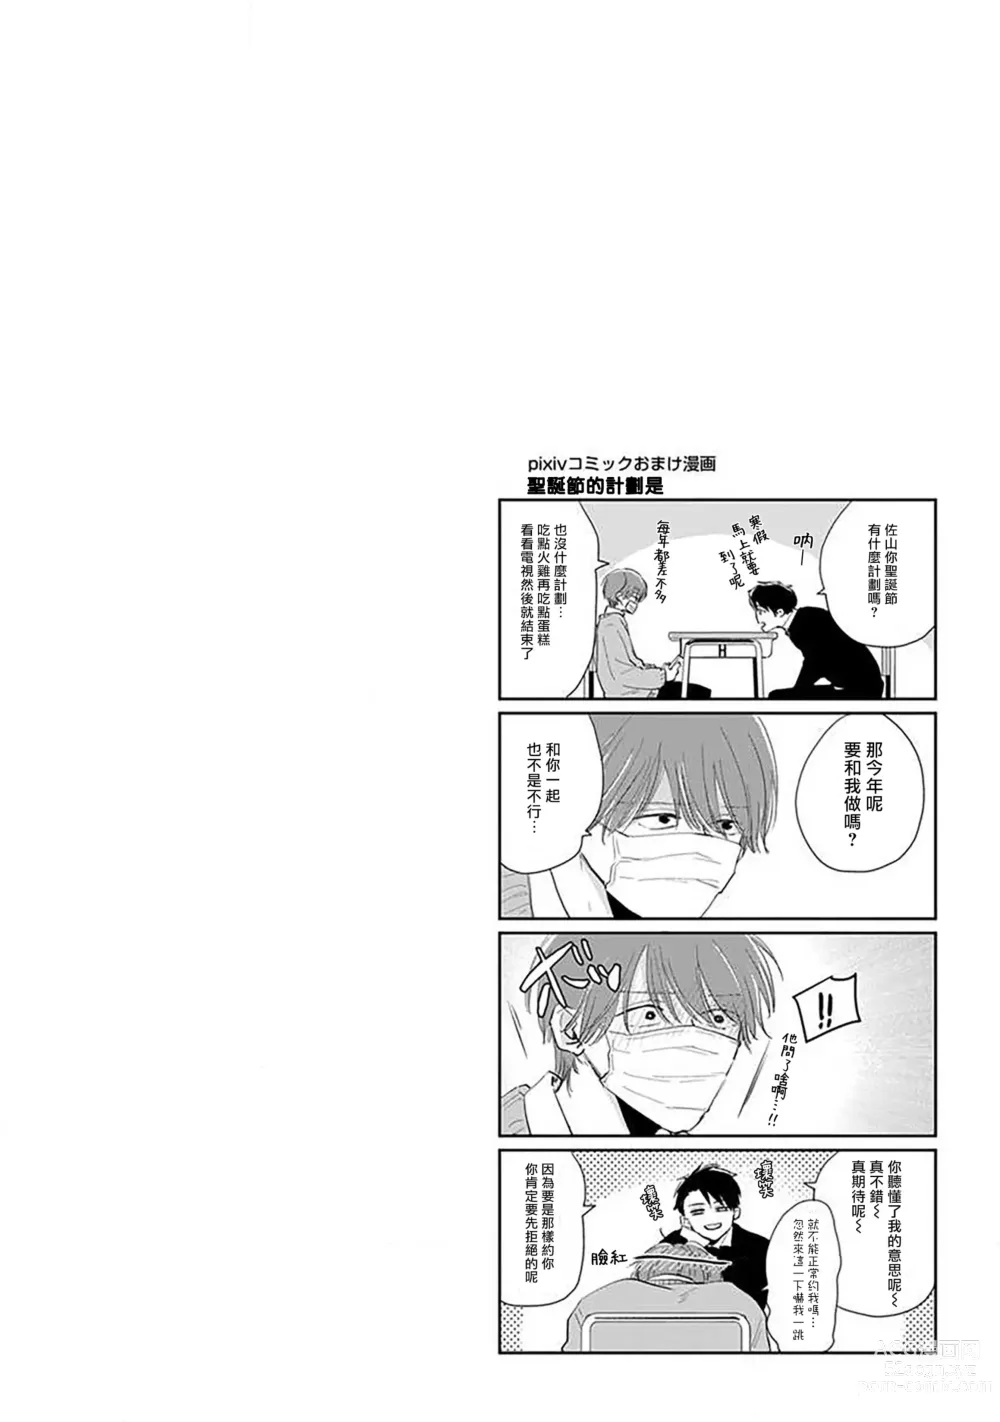 Page 205 of manga 口罩男子明明不想恋爱2 Ch. 11-19 番外“文化祭之夜” + 其他番外